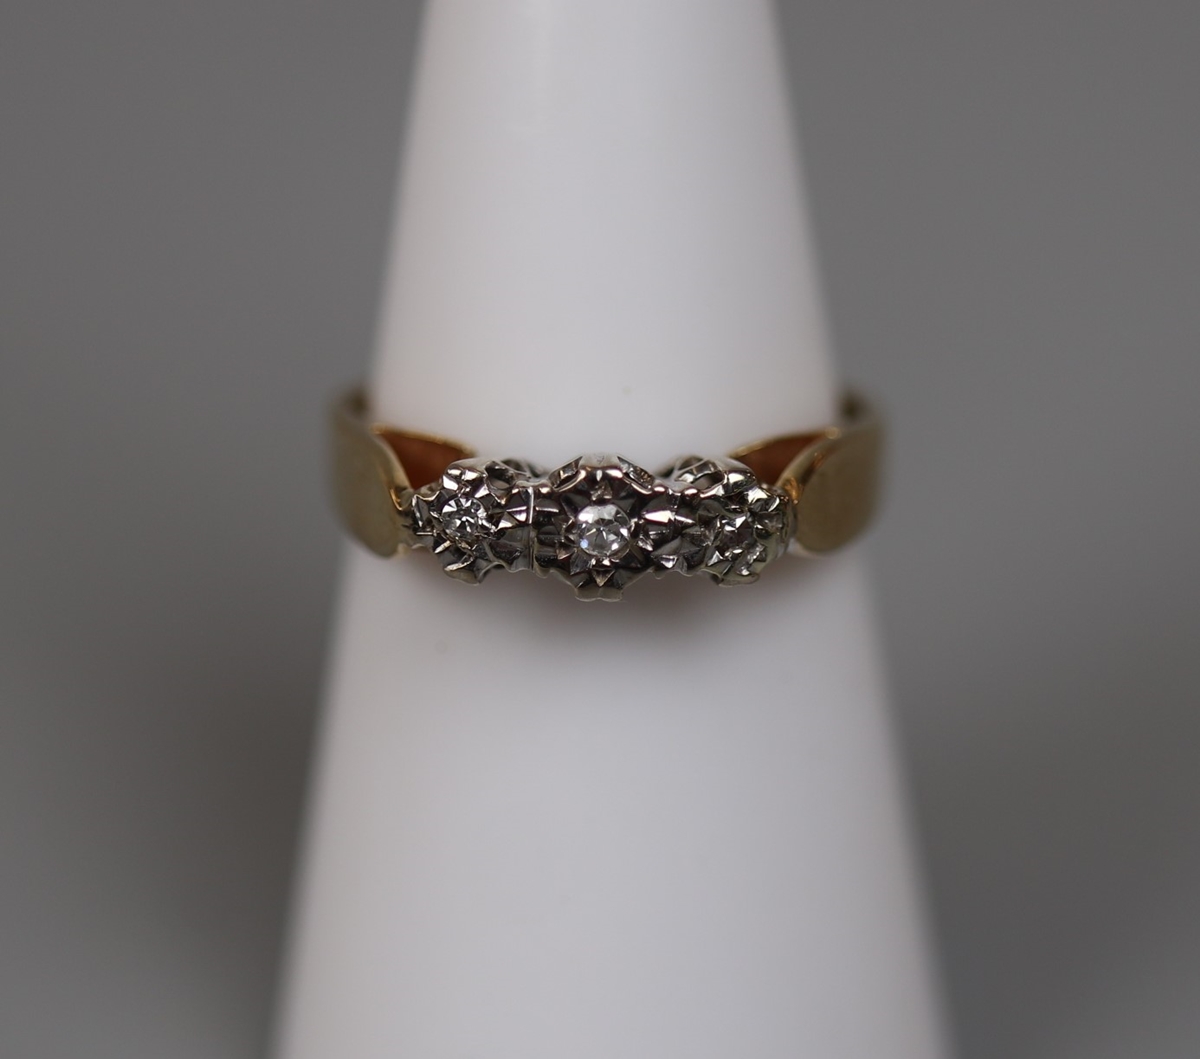 9ct gold 3 stone diamond set ring - Size M